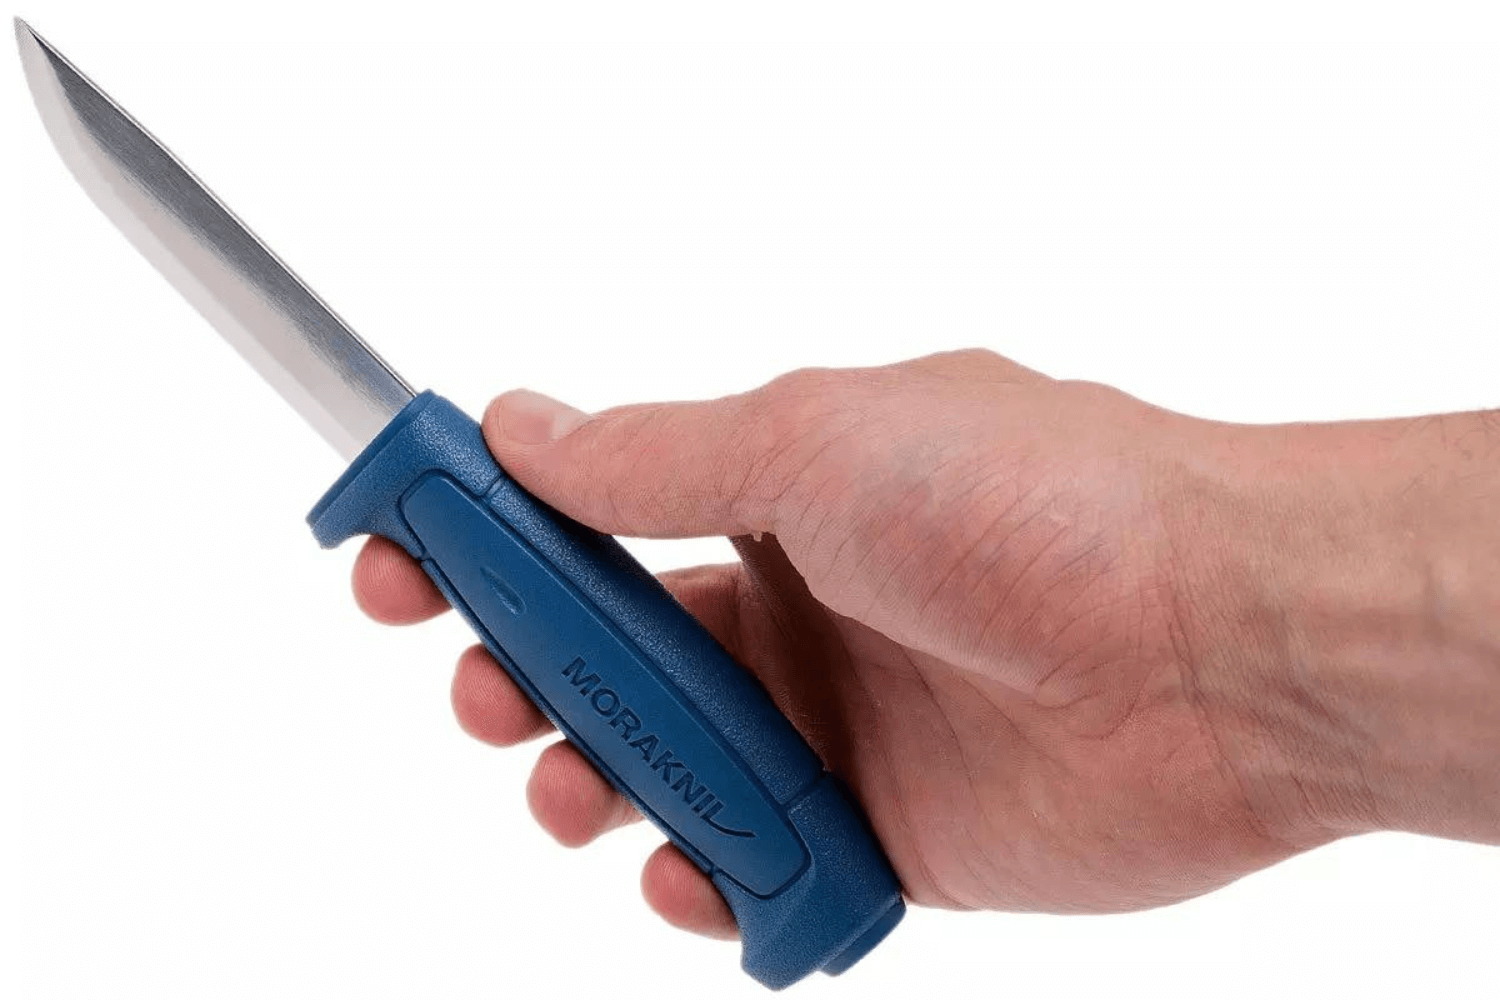 Couteau de ceinture Morakniv Basic 546